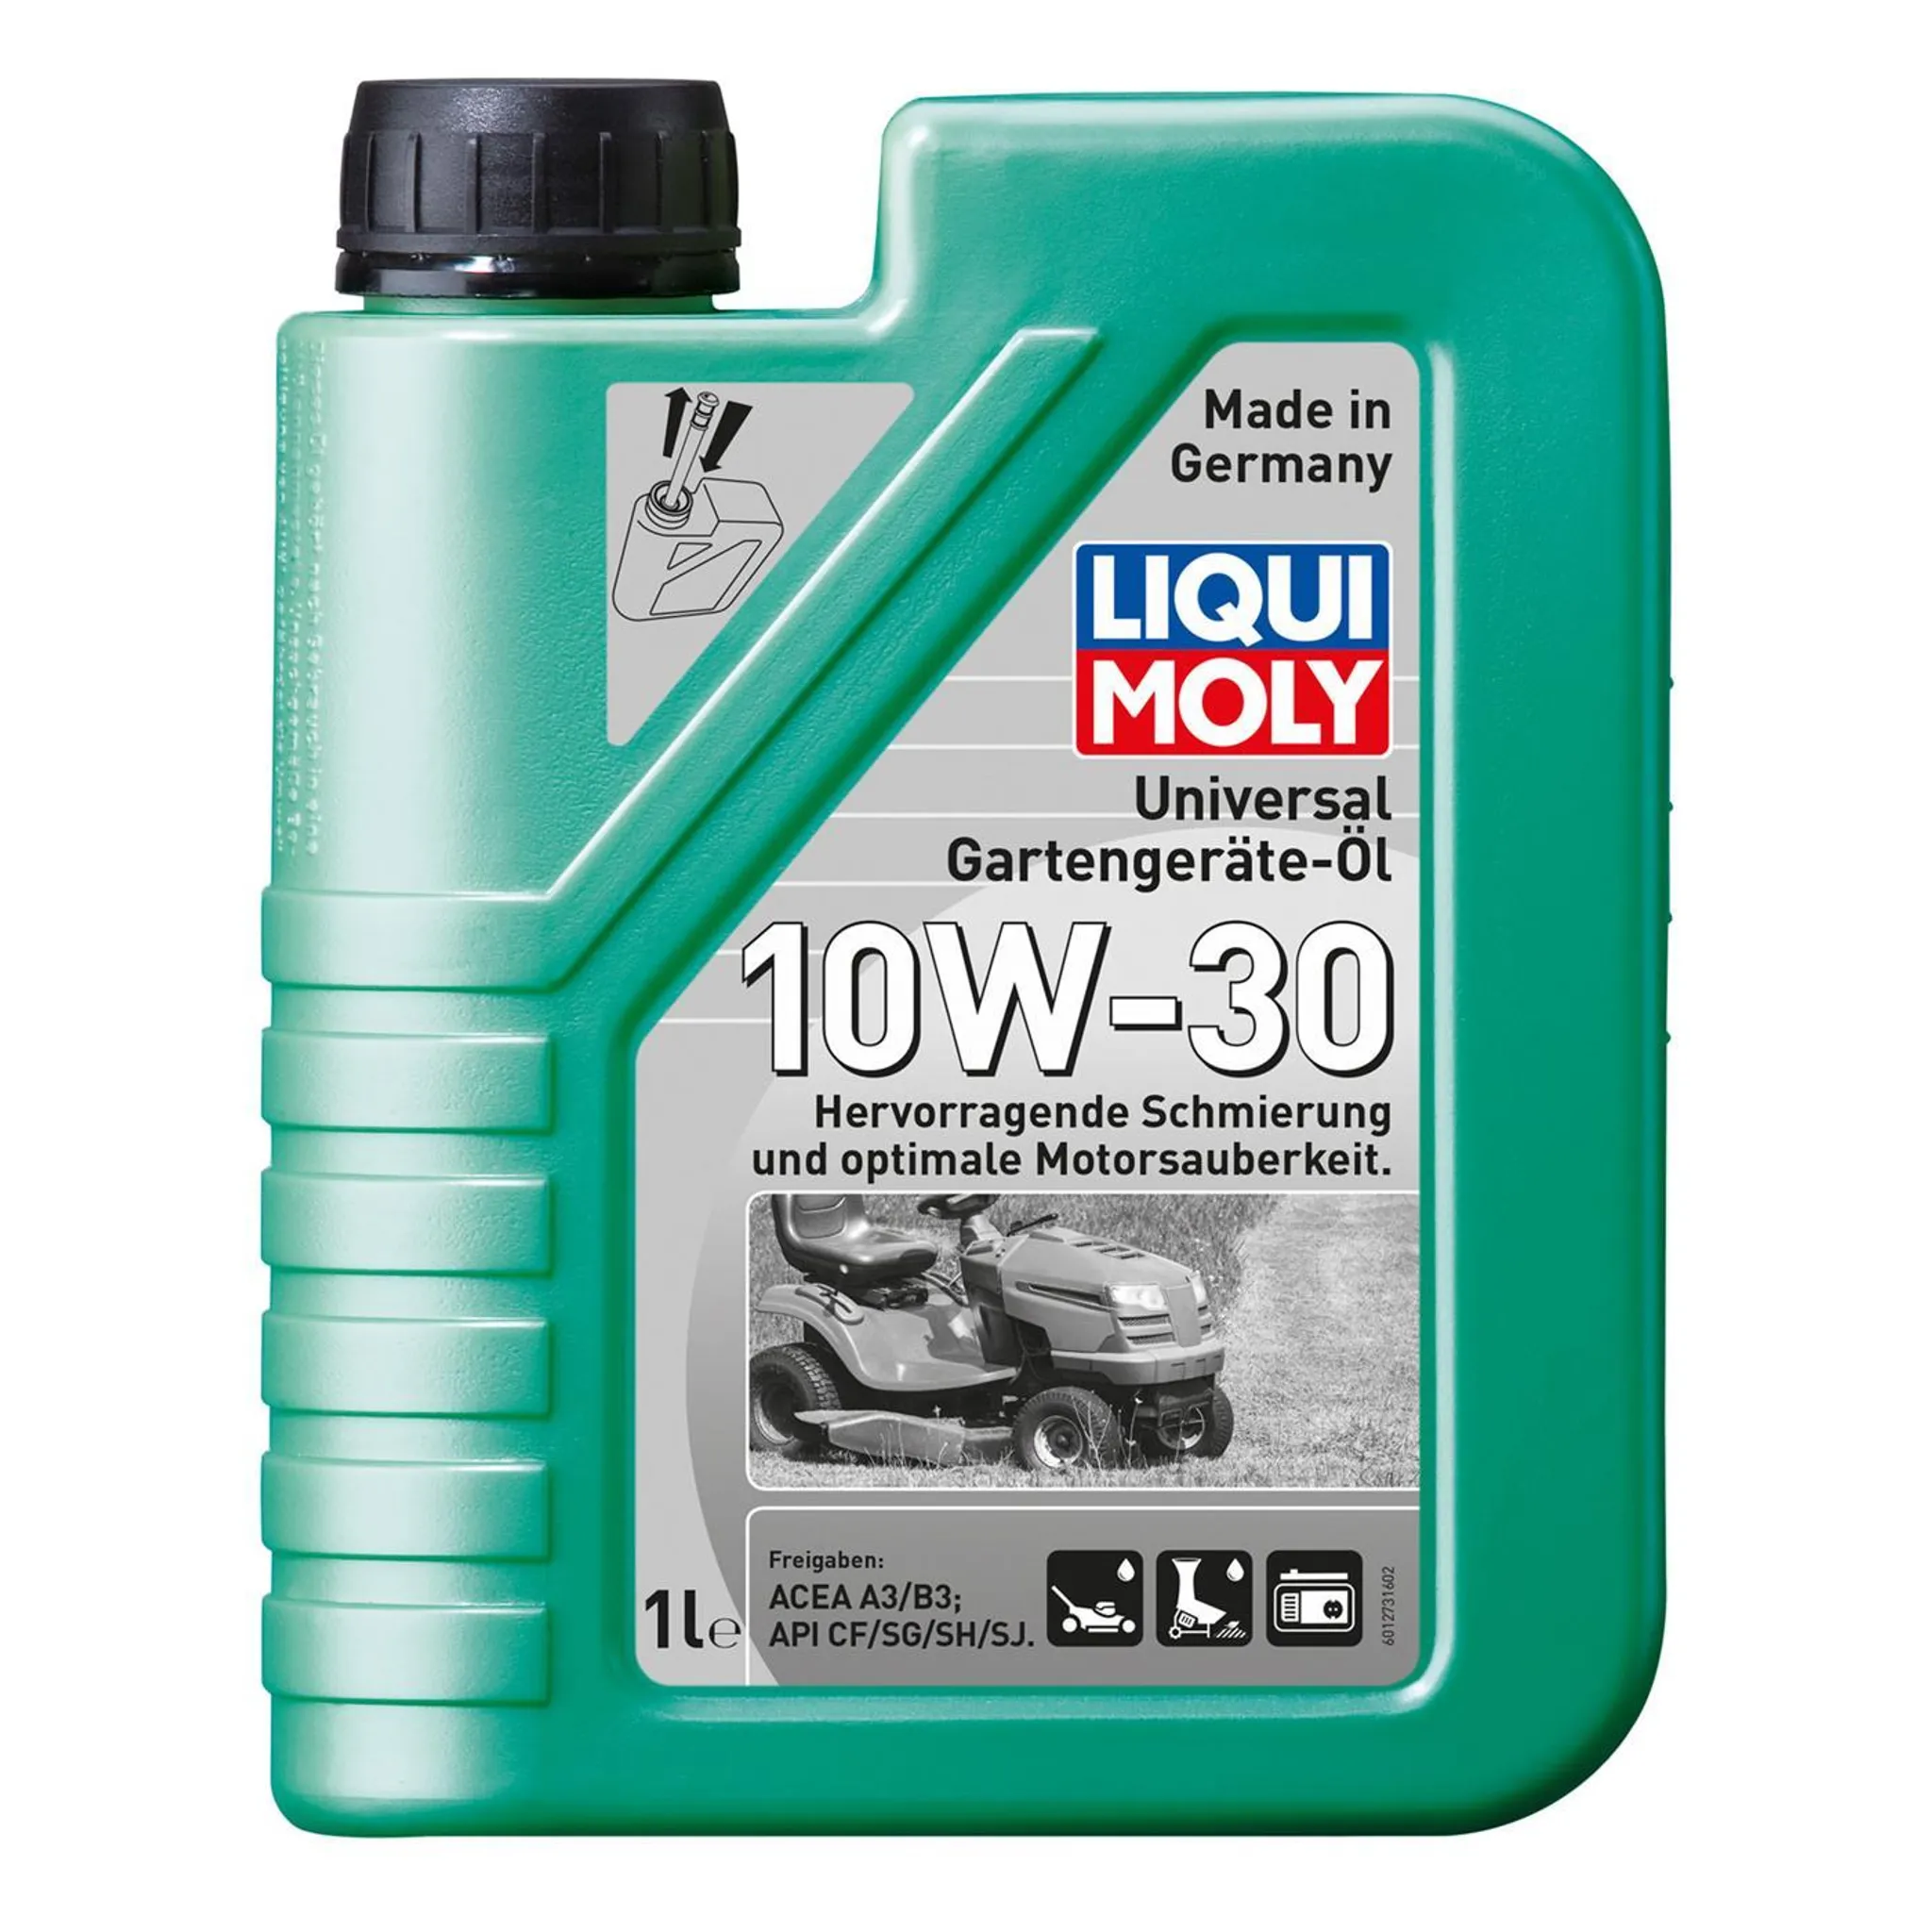 Liqui Moly Universal Gartengeräte Öl 10W 30